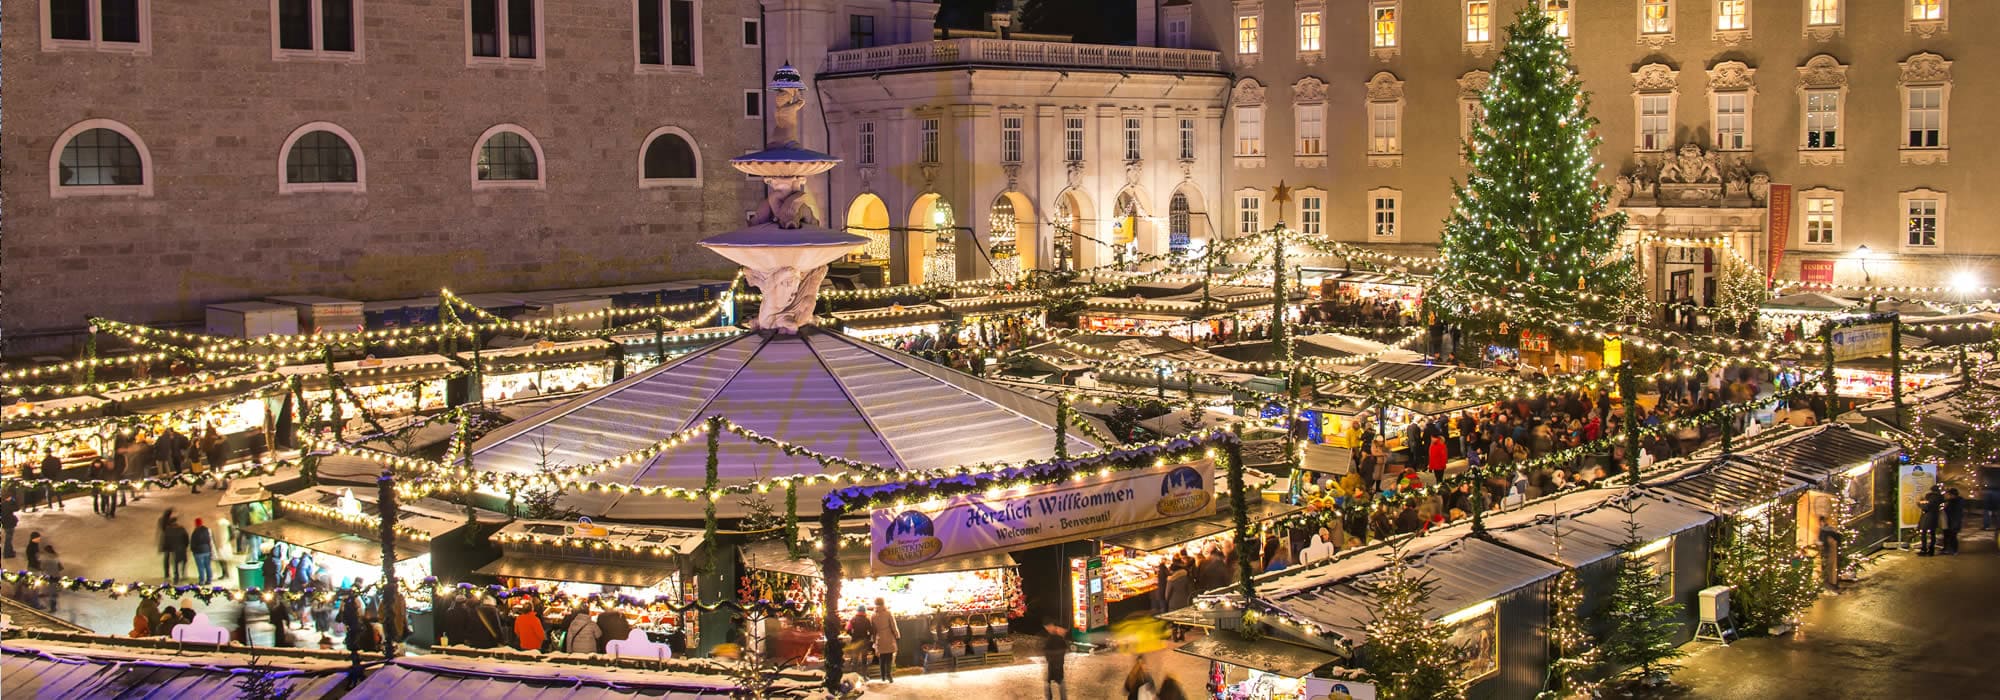 Advent magic in Hotel Alpendorf - Visit the Christmas market in Salzburg